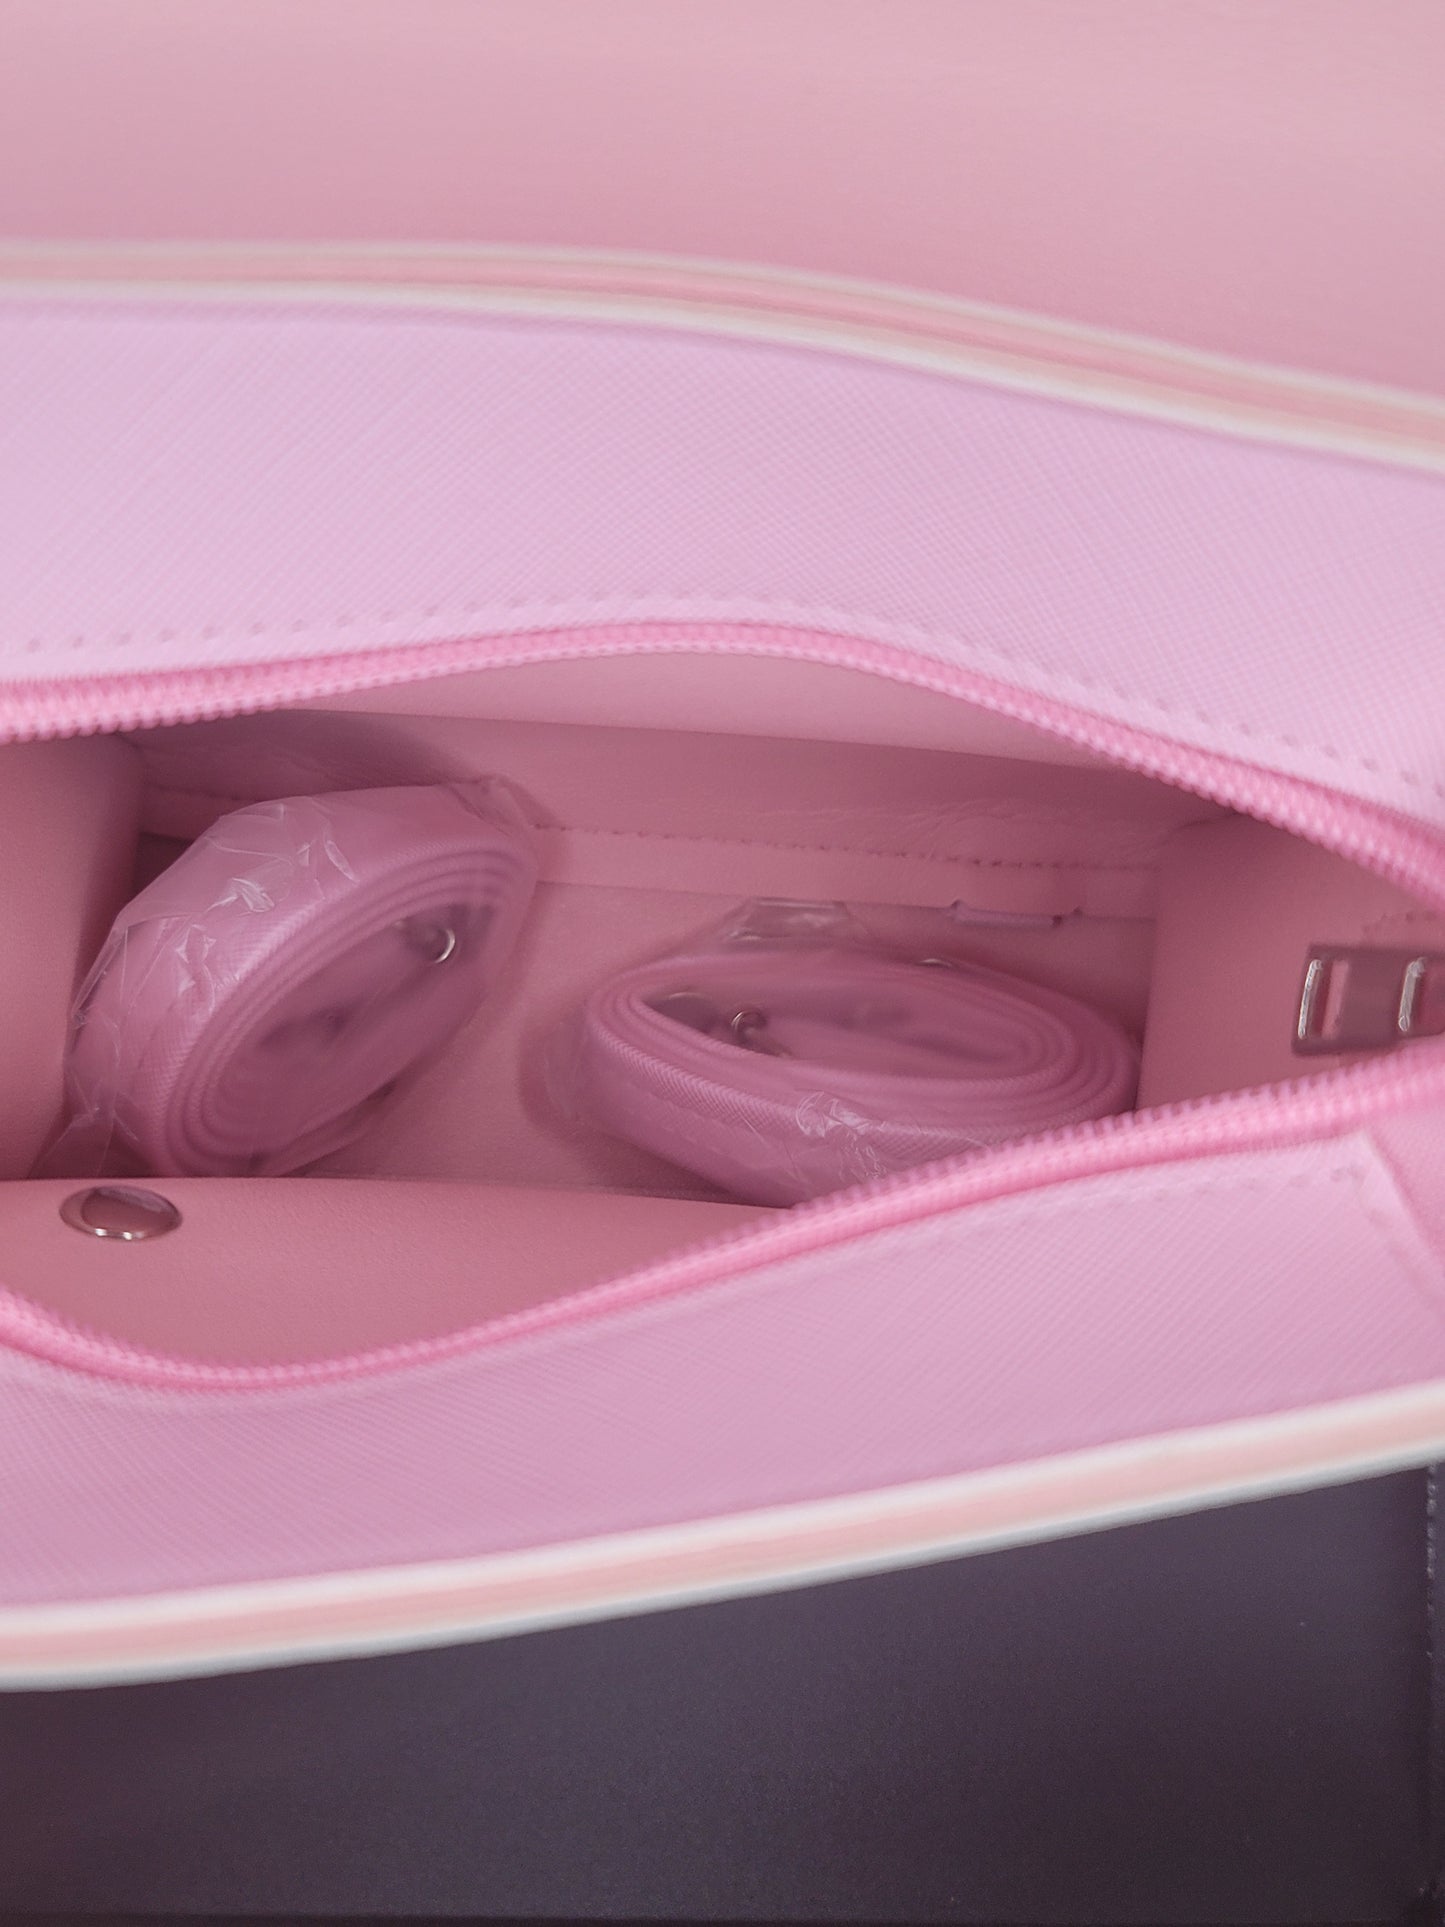 Kitty Small Pink Bookbag/Purse